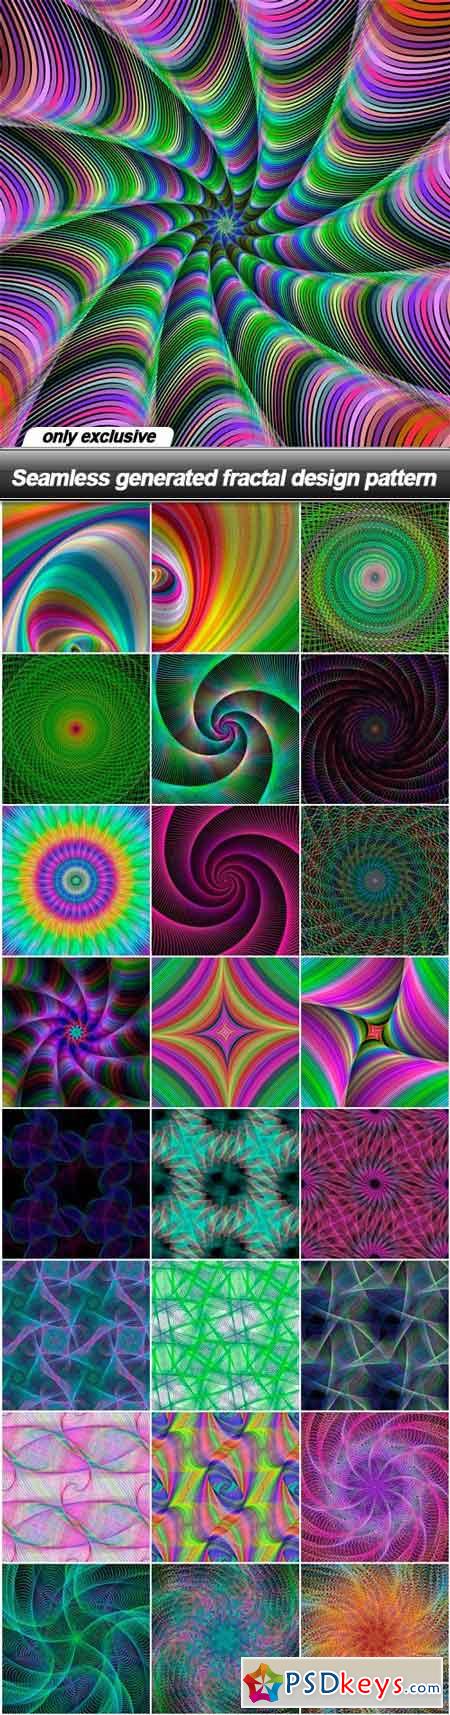 Seamless generated fractal design pattern - 25 EPS